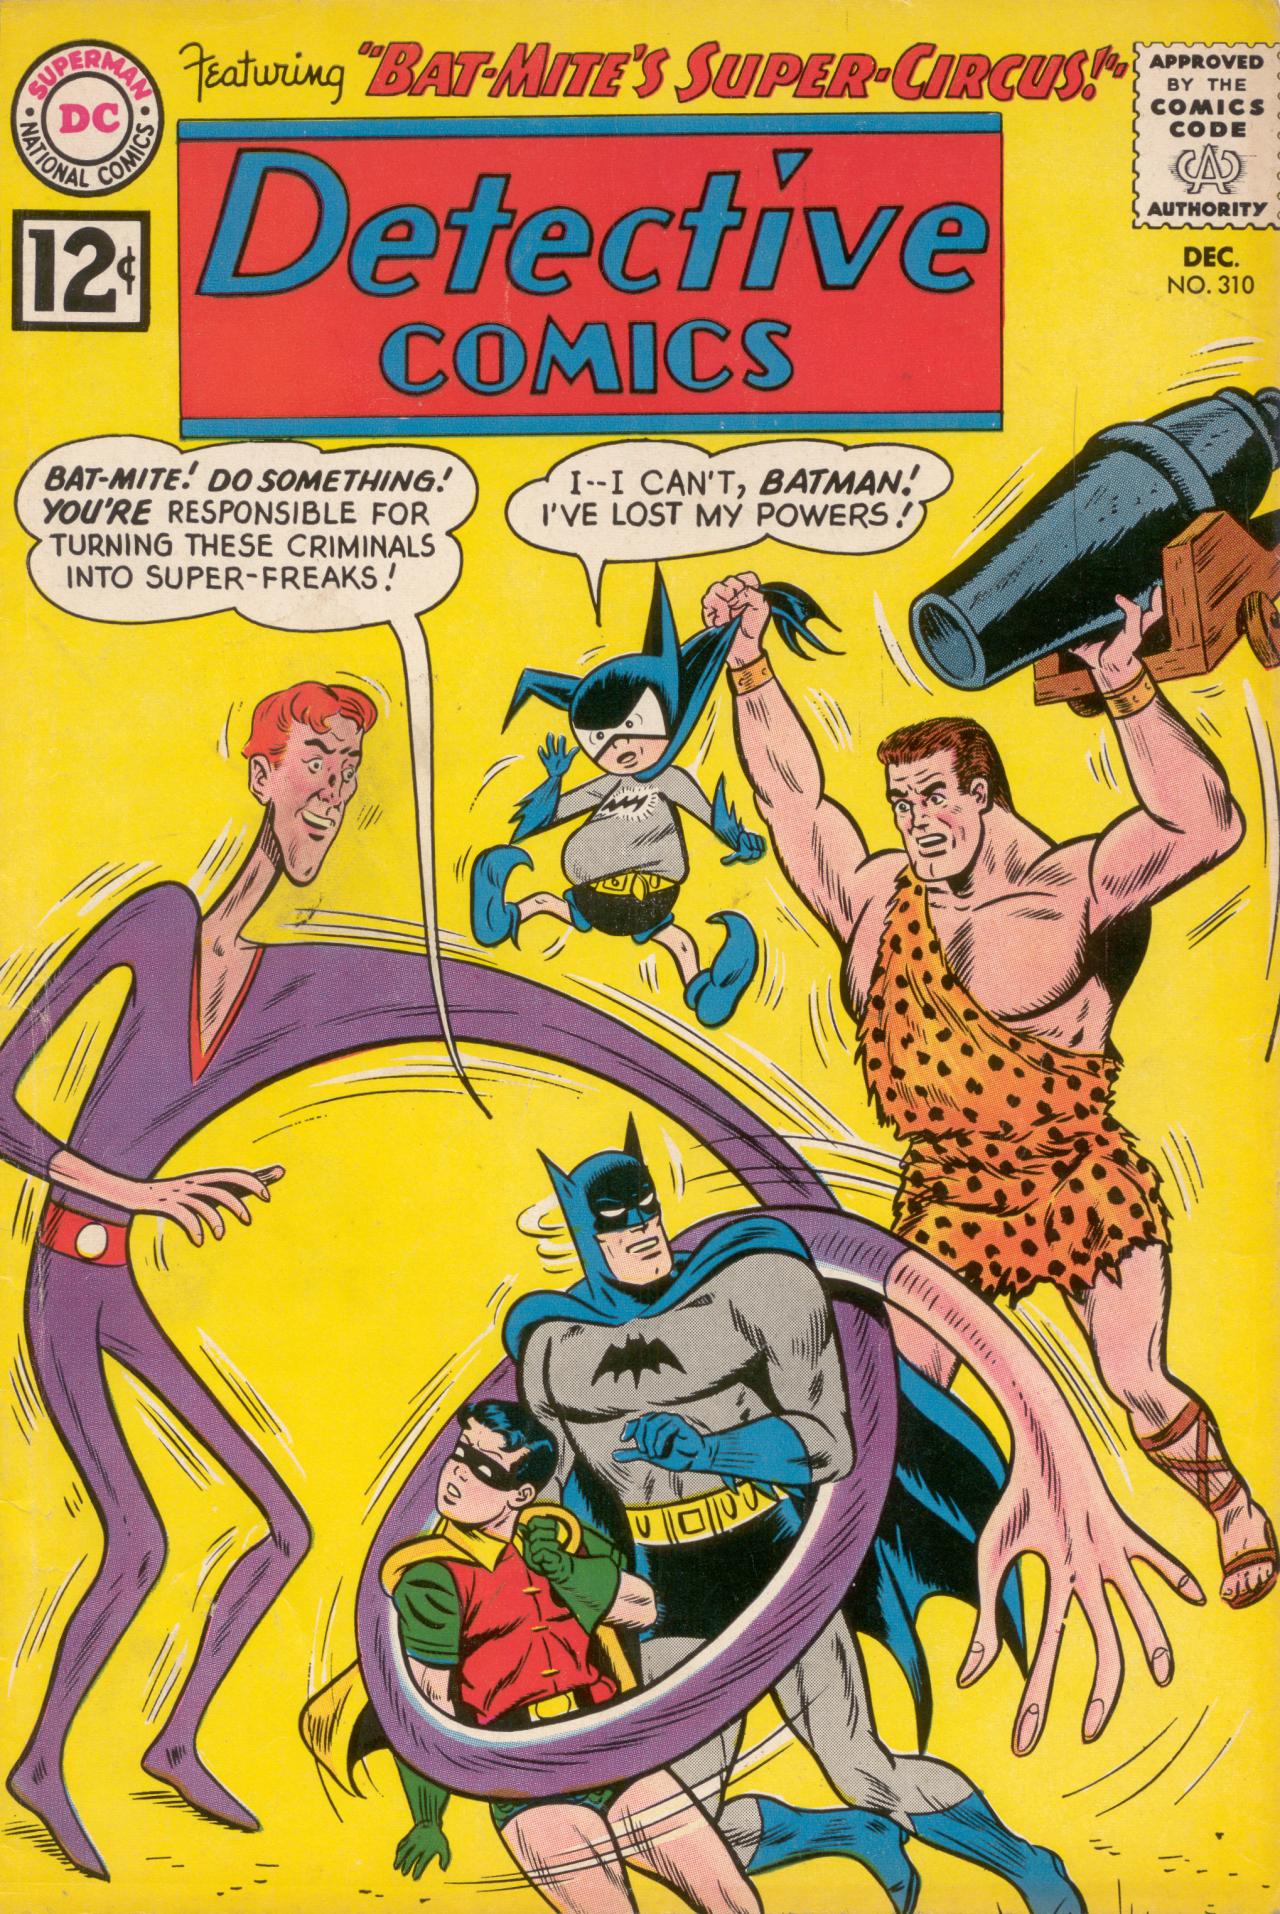 Read online Detective Comics (1937) comic - Issue #310 - 1. Online read com...